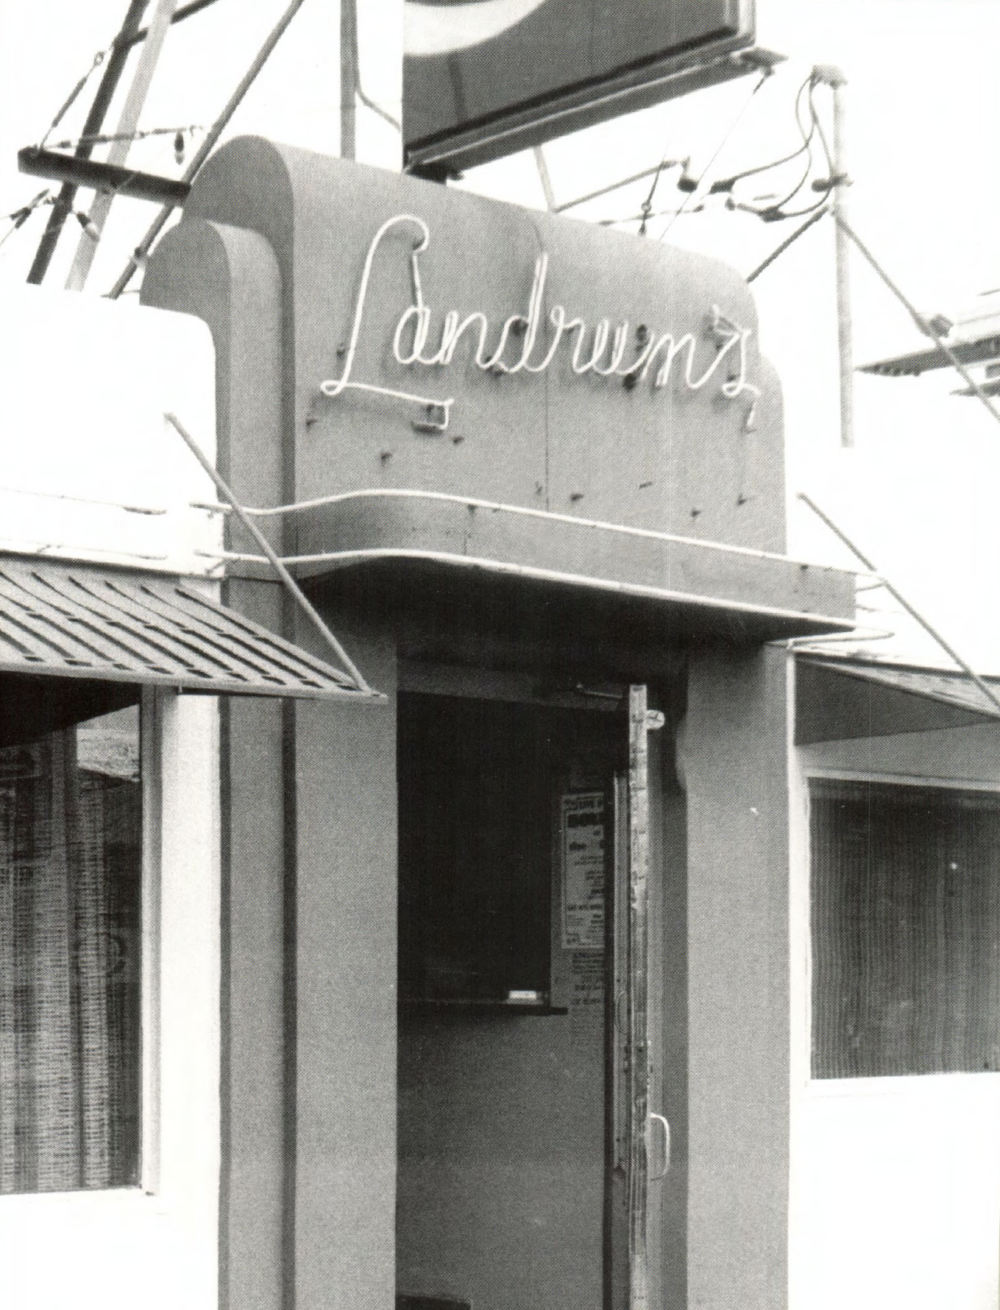 Landrum's Diner, Reno, Nevada